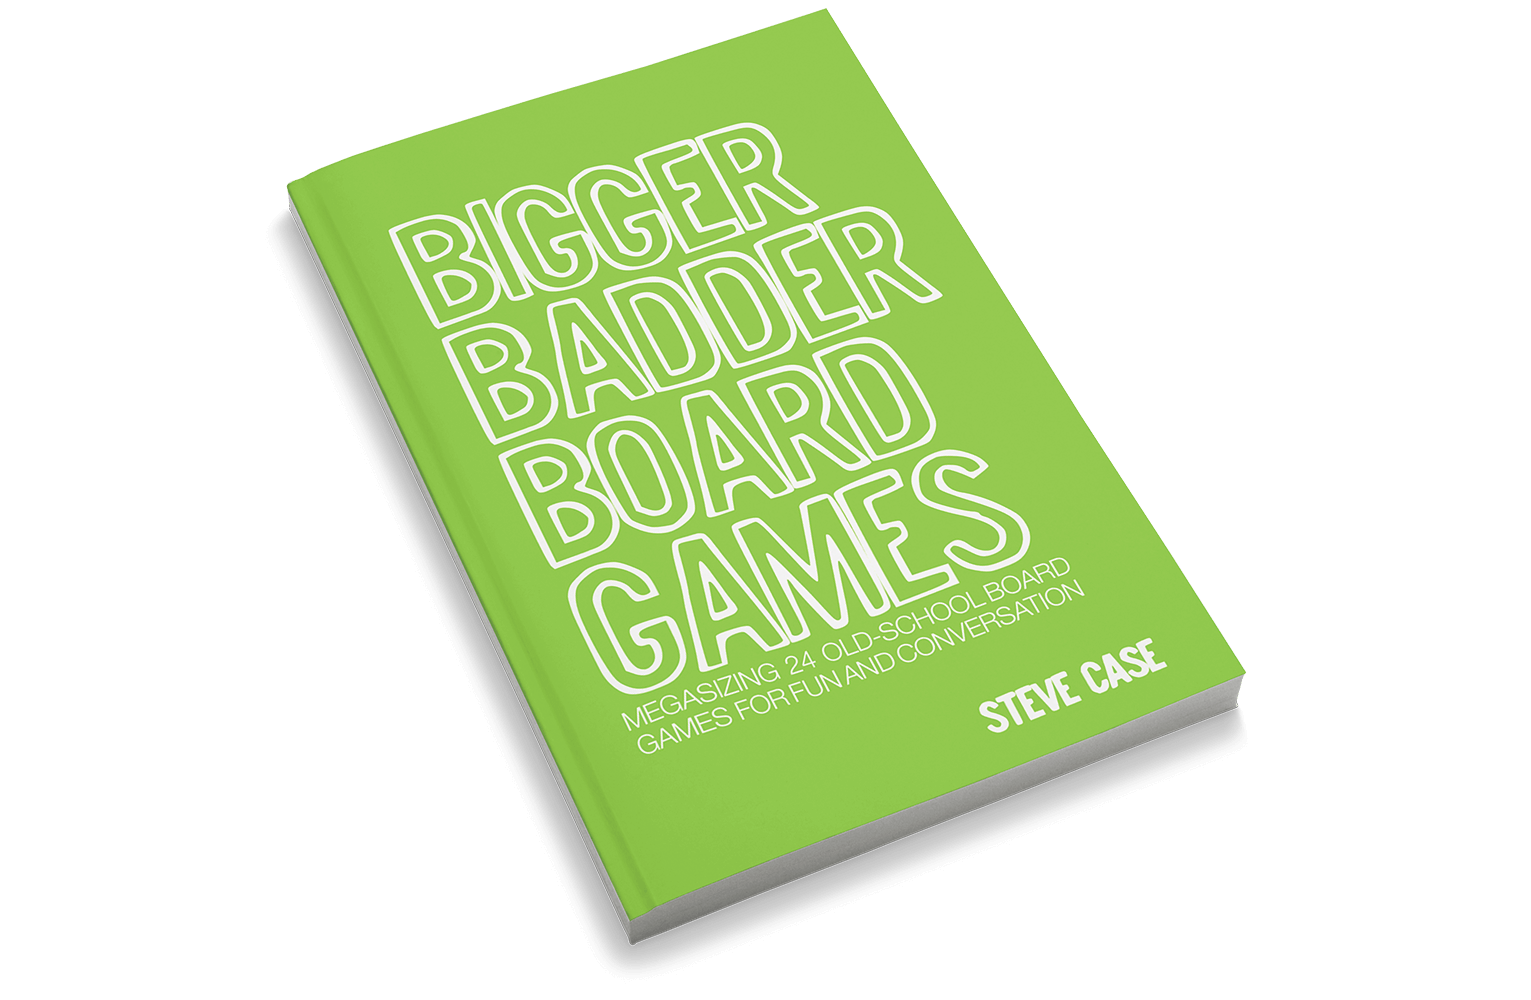 Bigger Badder Board Games: Megasizing 24 Old-School Board Games for Fun and Conversation